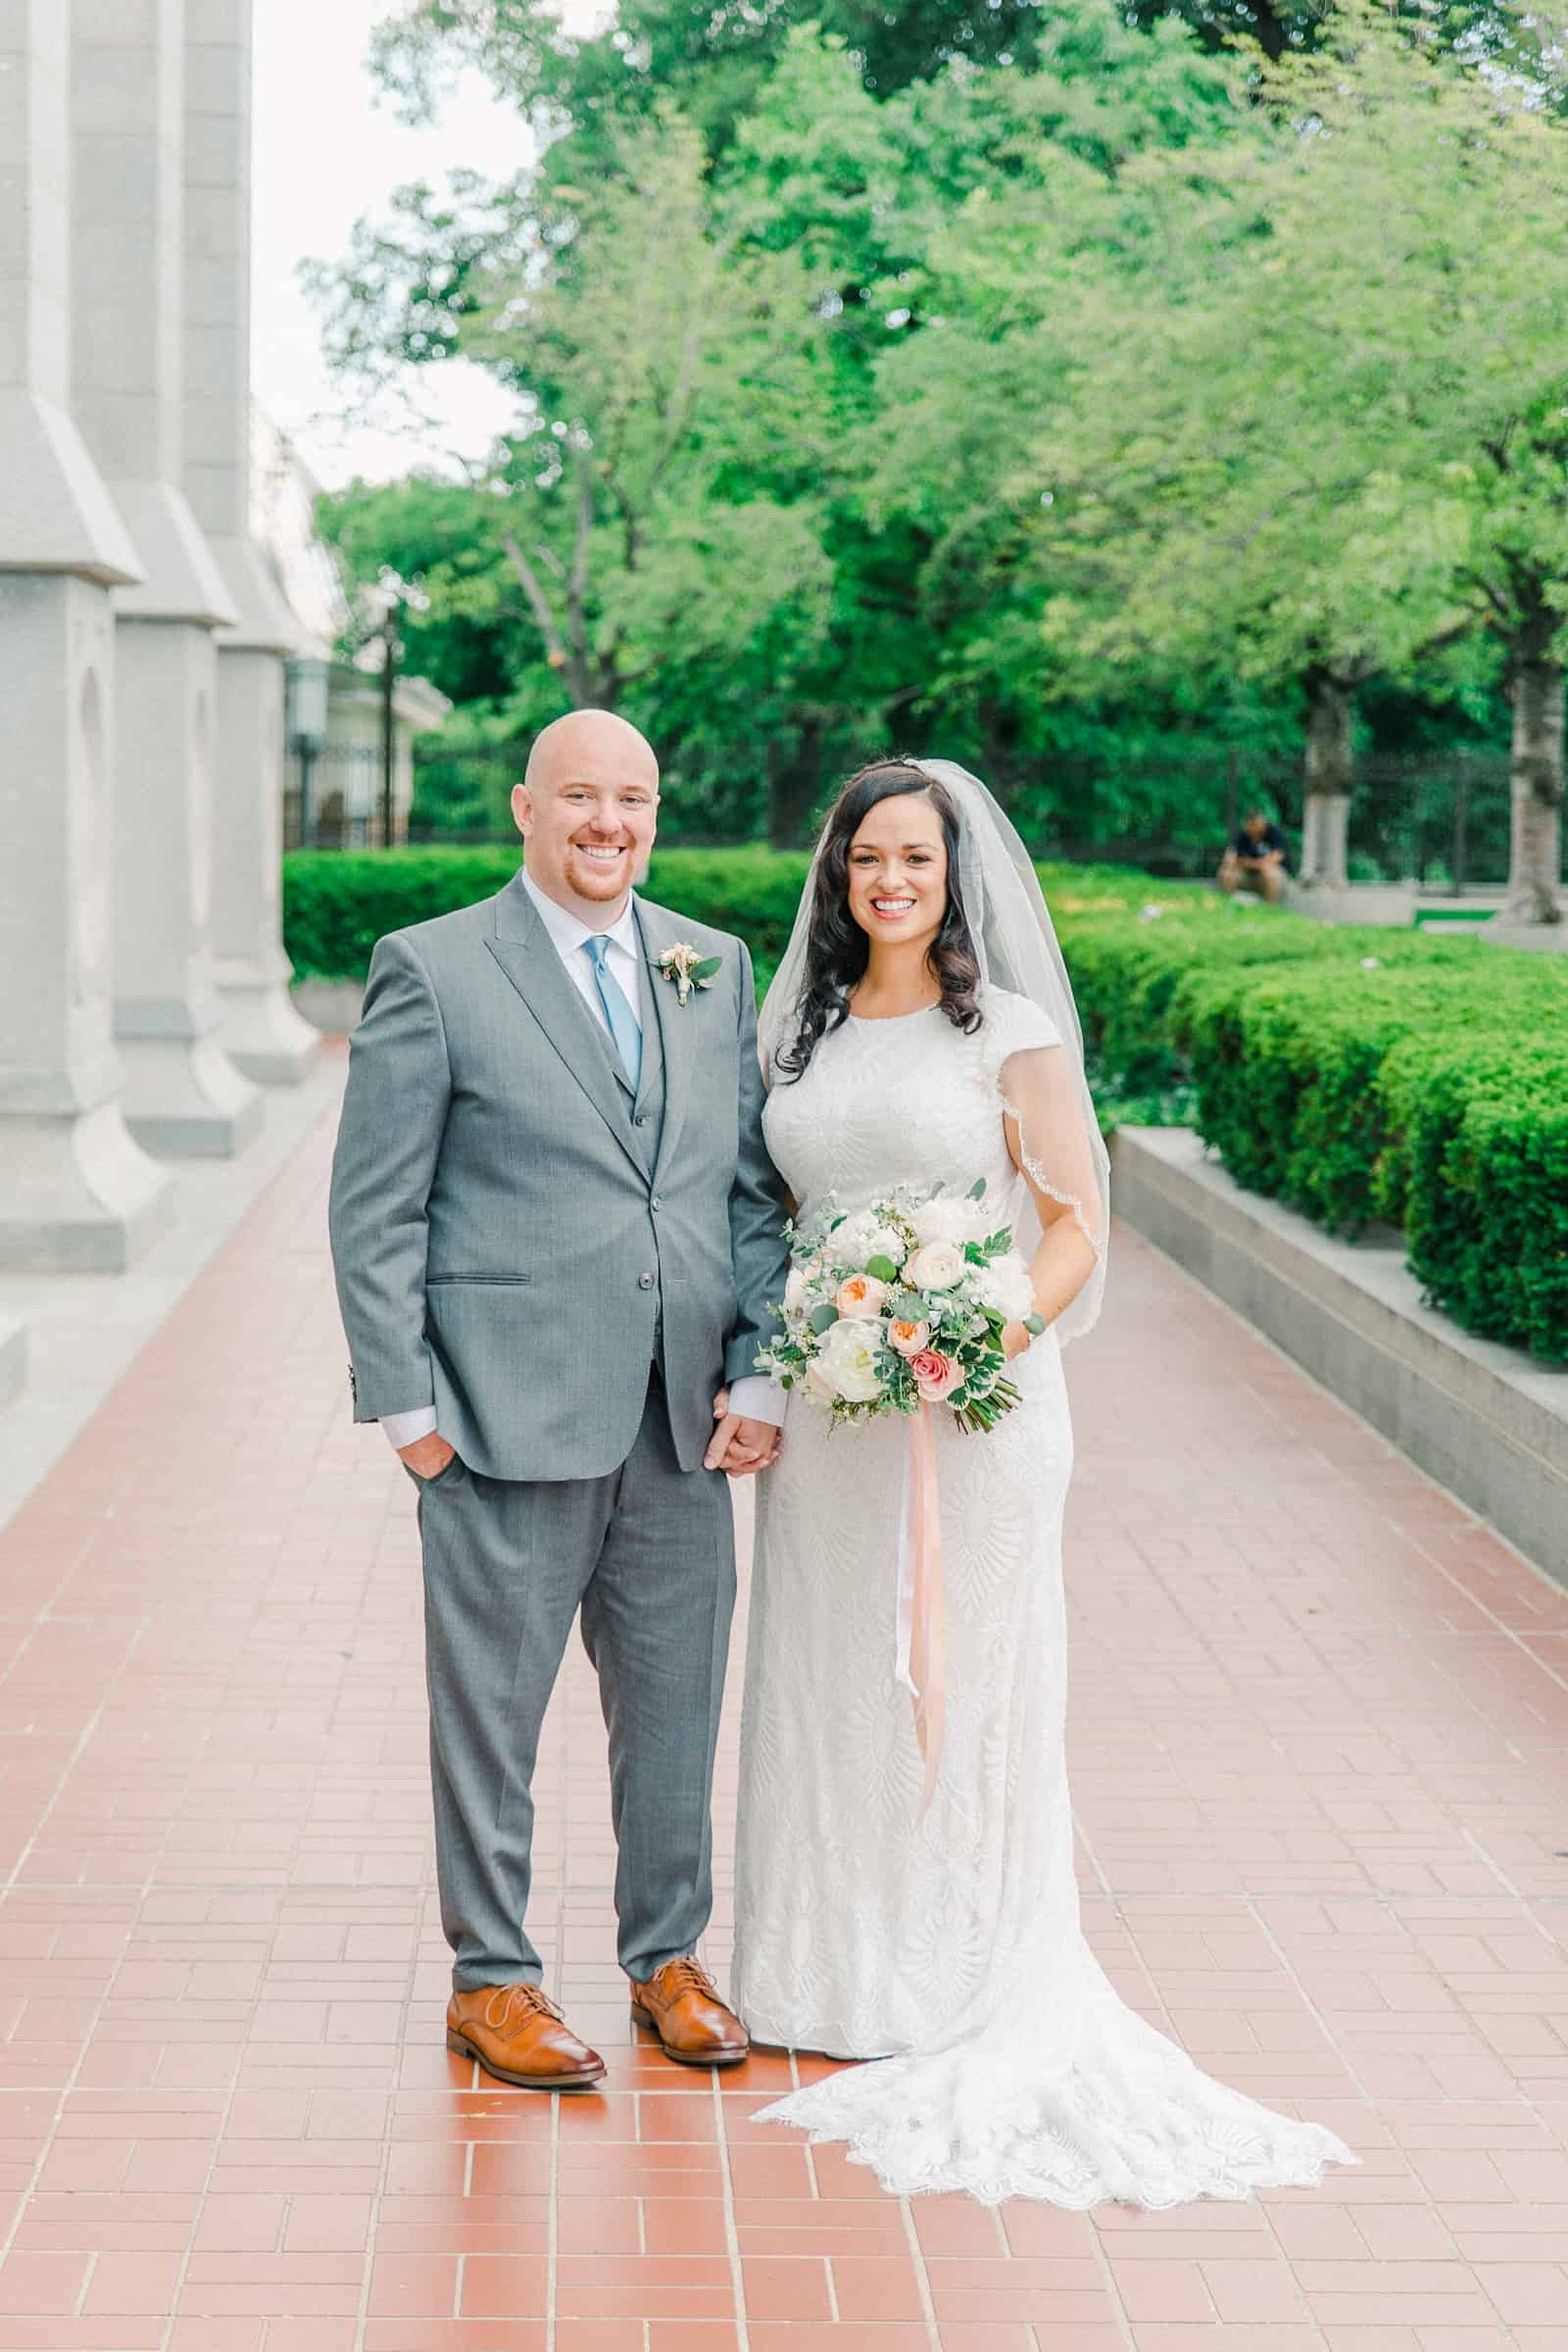 Thomas S. Monson Center Wedding, Salt Lake LDS Temple Wedding, Utah wedding photography. bride and groom